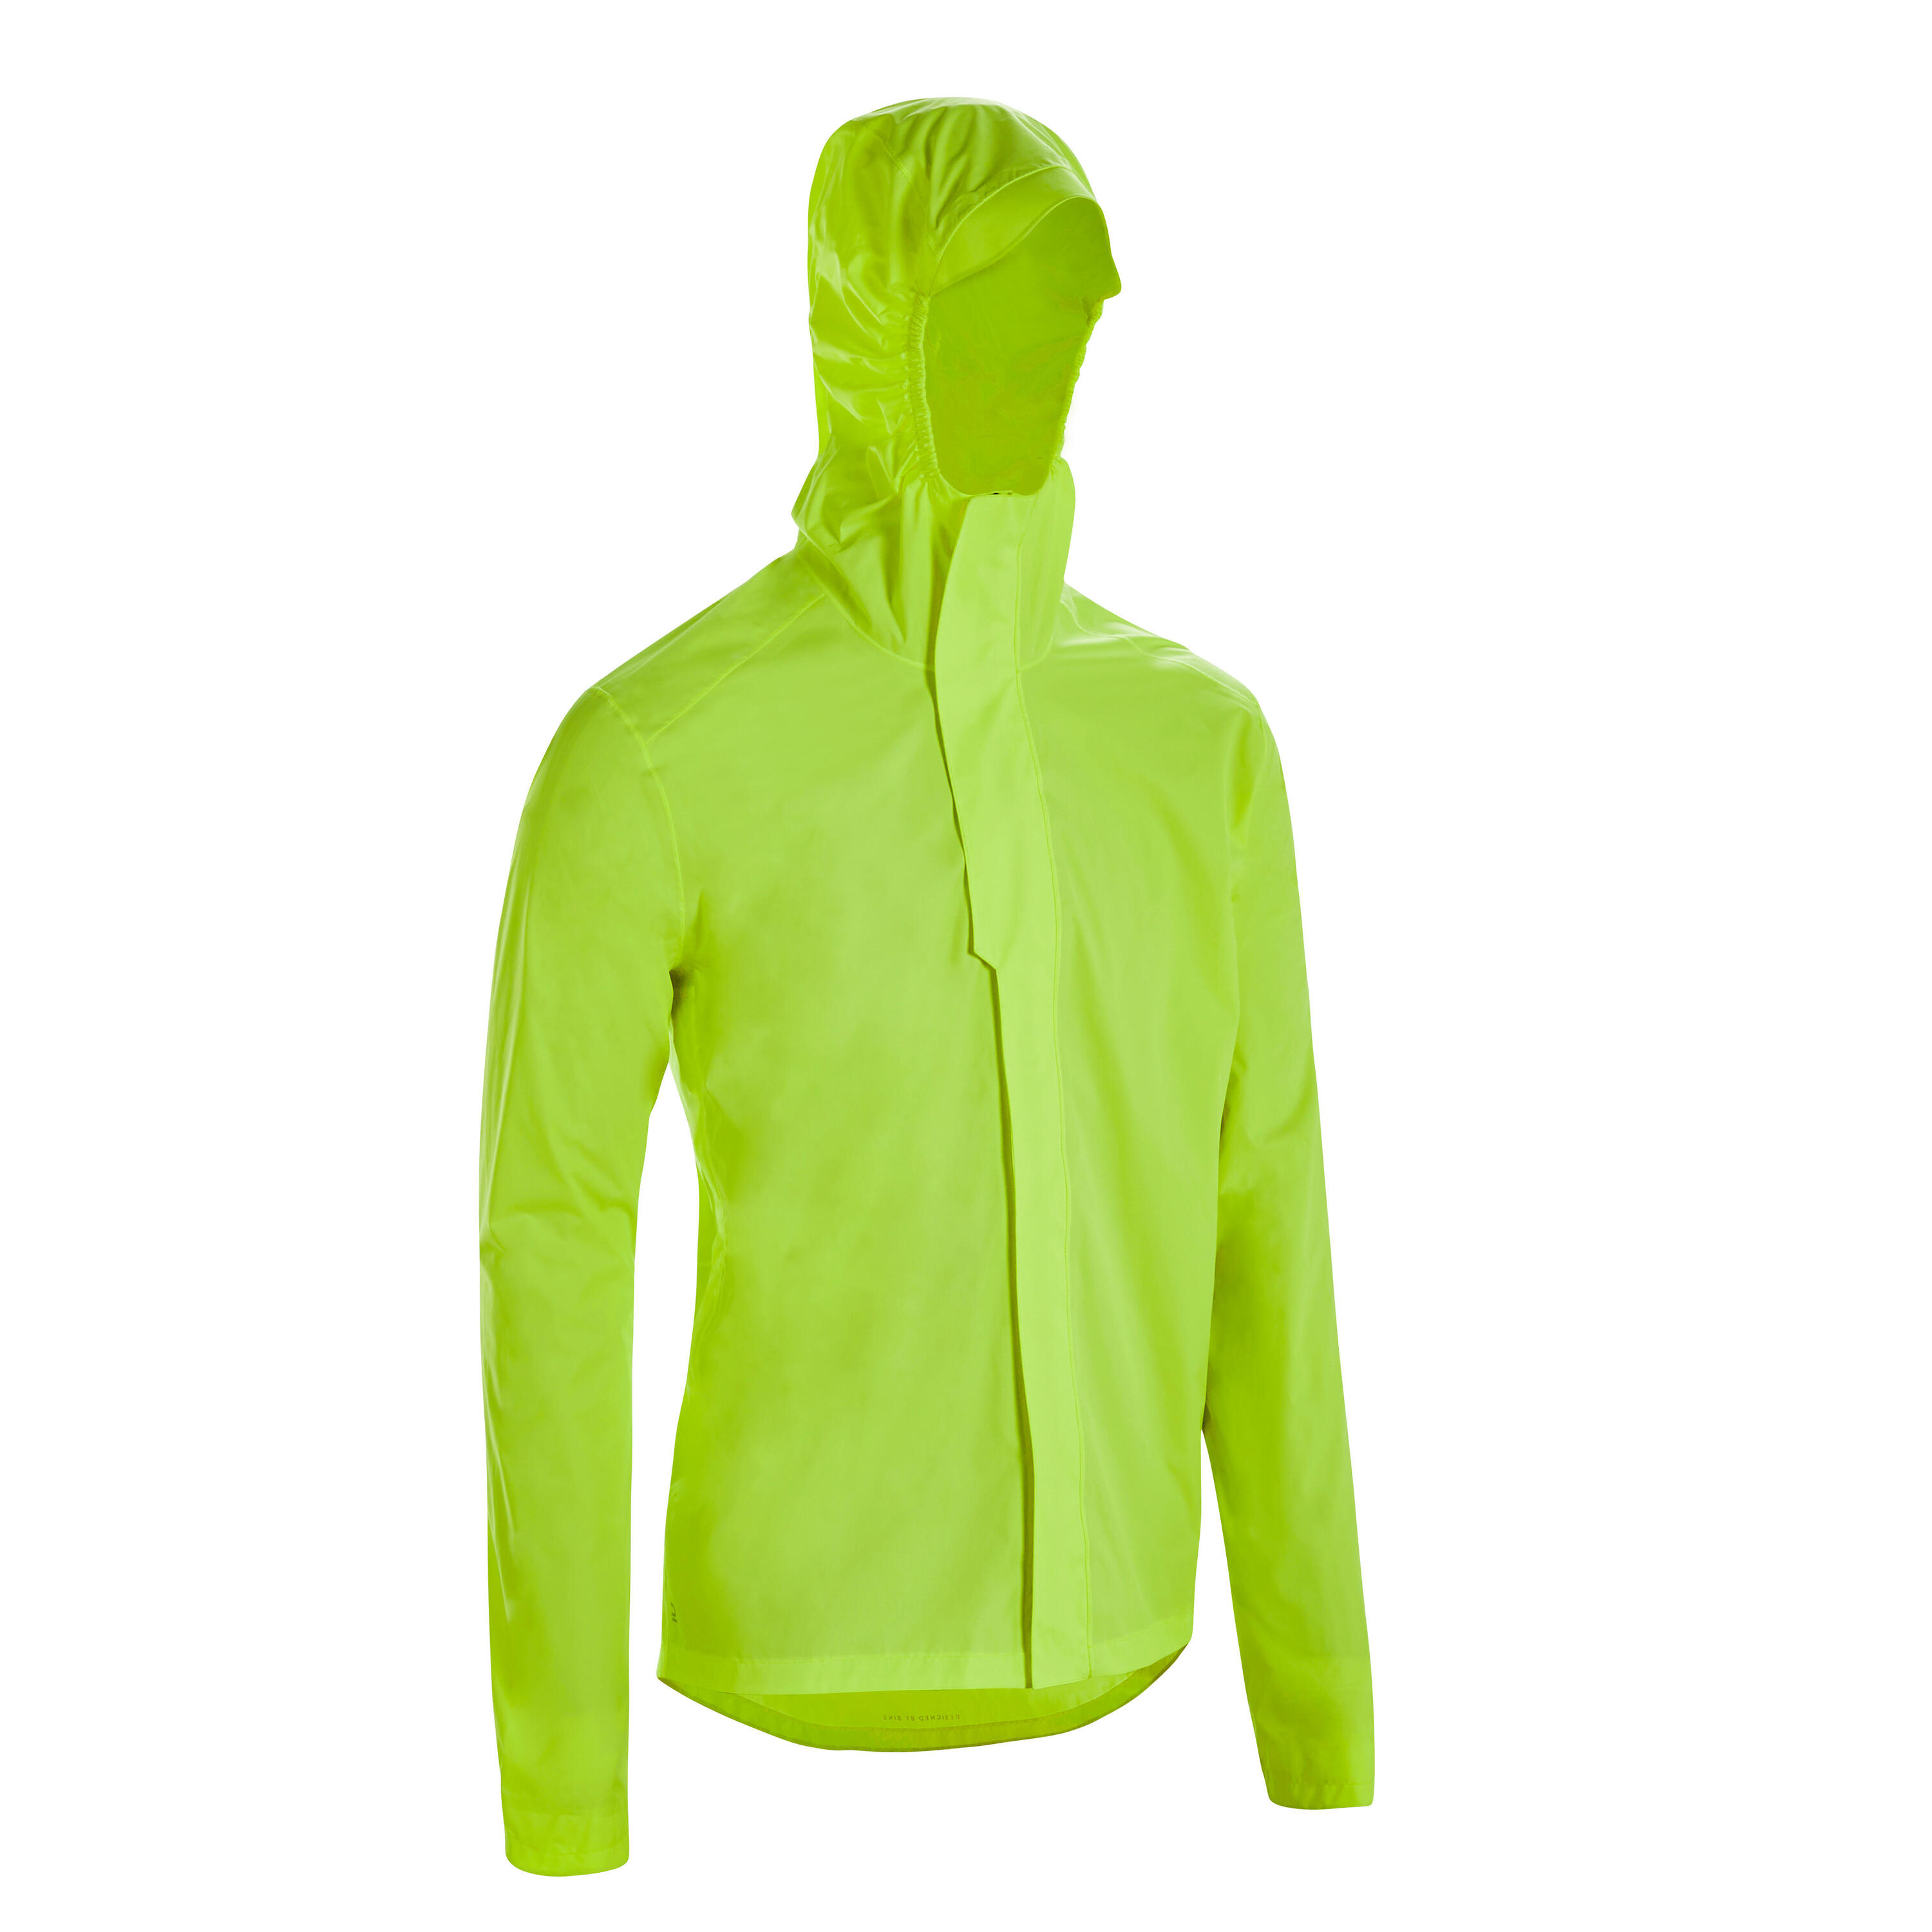 100 Men's Waterproof Urban Cycling Jacket - Neon Yellow 28/29